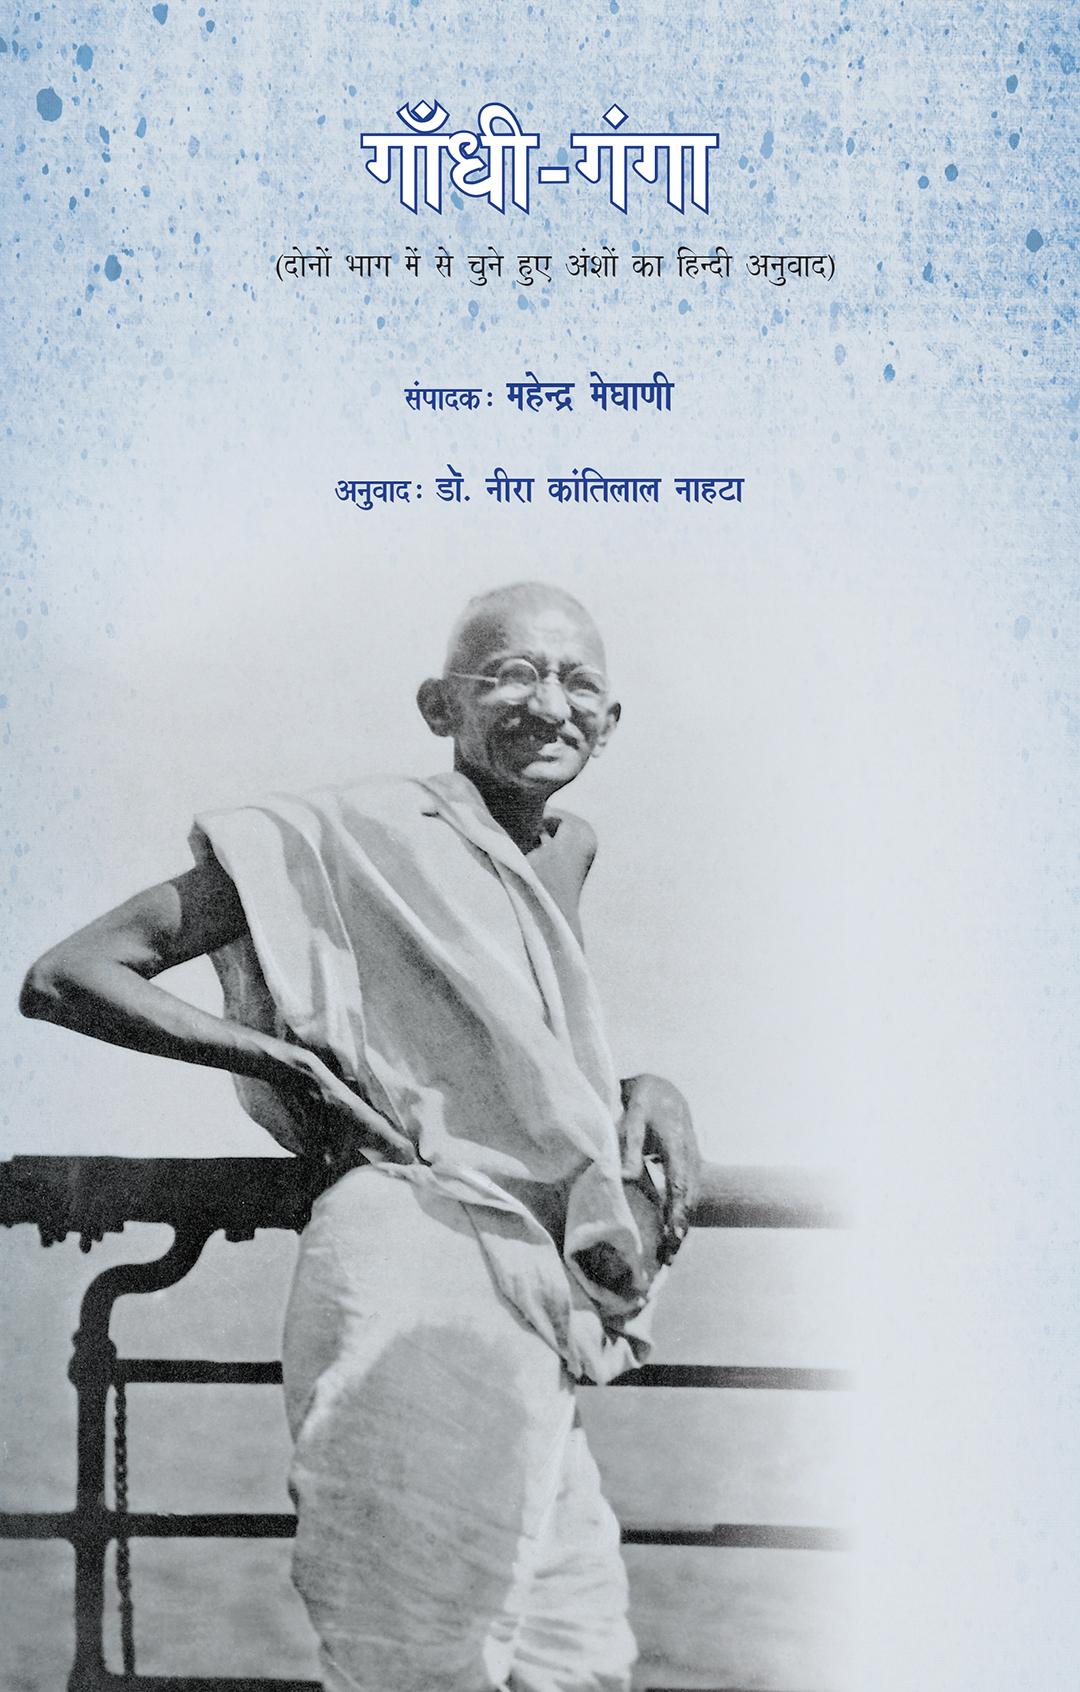 Gandhi-Ganga-Hindi (गाँधी-गंगा-हीन्दी)